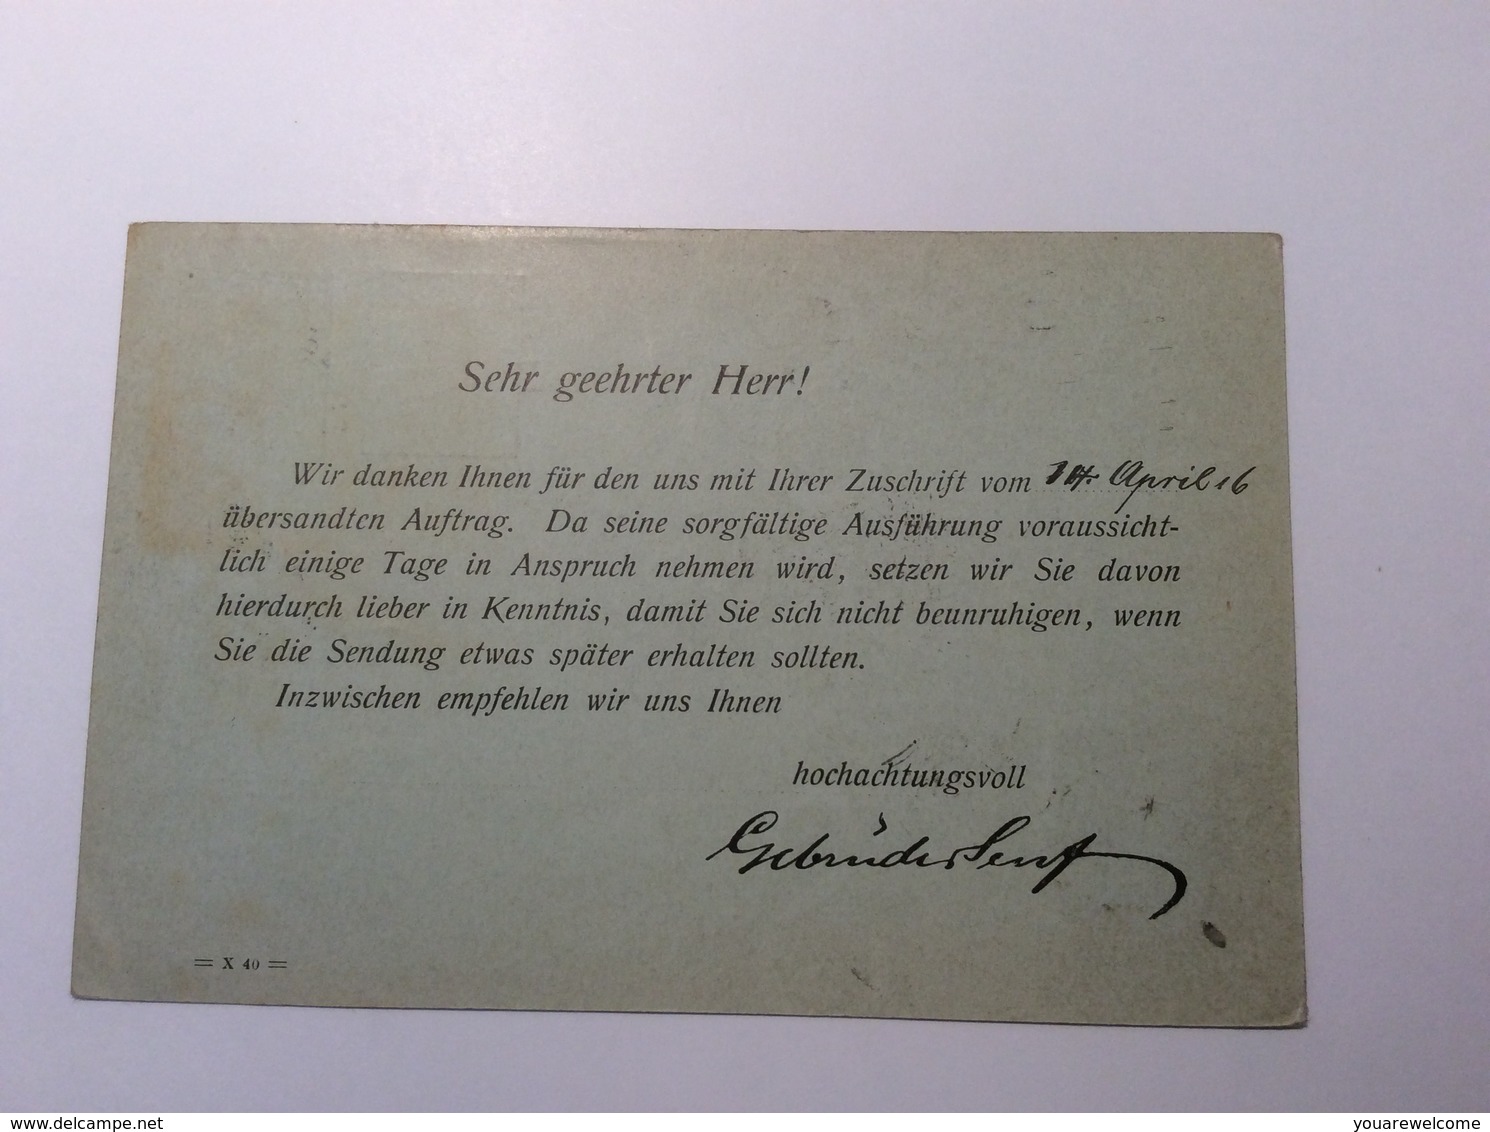 Norway 1916 Postage Due On Deutsches Reich Germania Postal Stationery (Ganzsache Cover Lettre Brief - Lettres & Documents